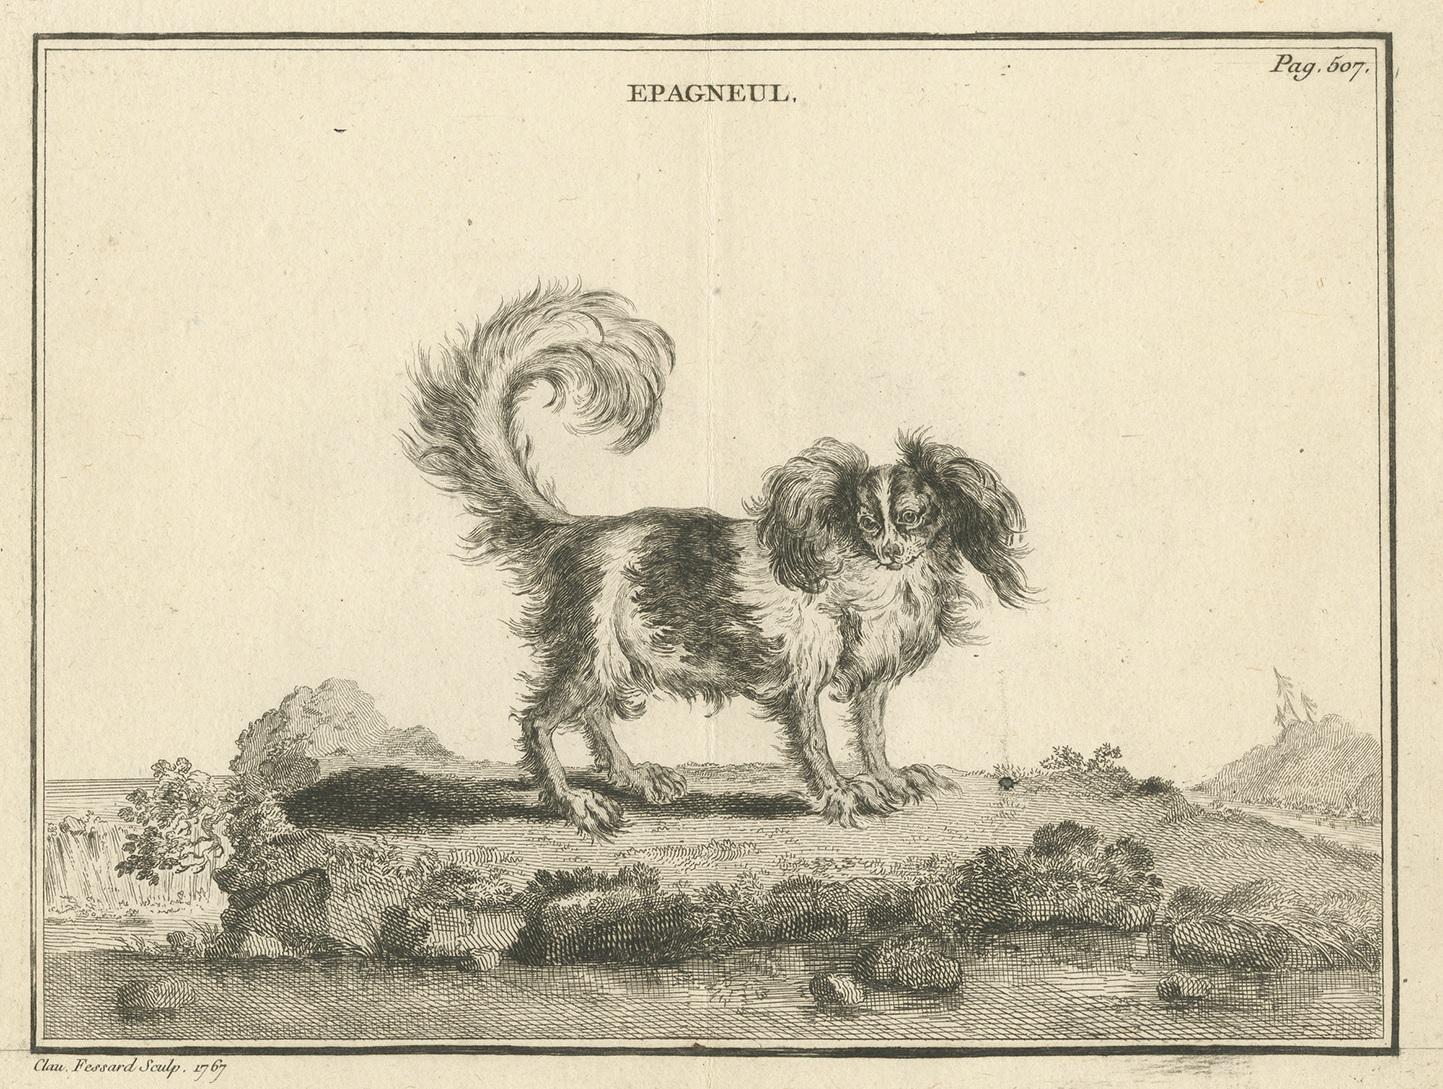 Antique print titled 'Epagneul'. Copper engraving of a Brittany dog (?). This print originates from 'Handboek der genees- en verloskunde van het vee (..)' by A. Numan. Published by R.J. Schierbeek, 1819. Engraved by C. Fessard.